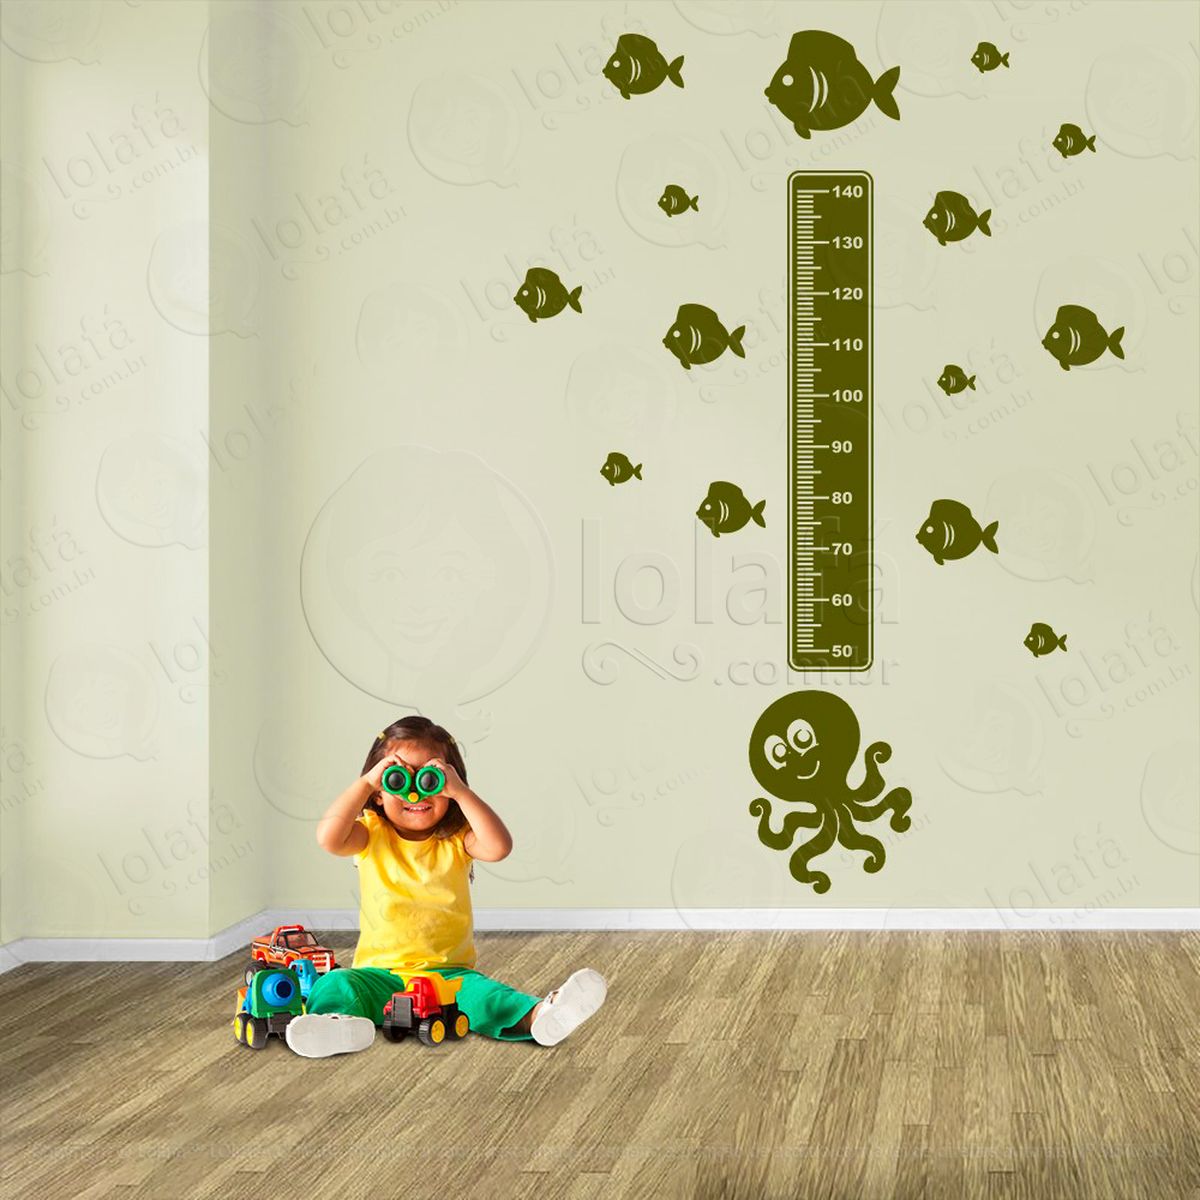 polvo e peixes adesivo régua de crescimento infantil, medidor de altura para quarto, porta e parede - mod:131